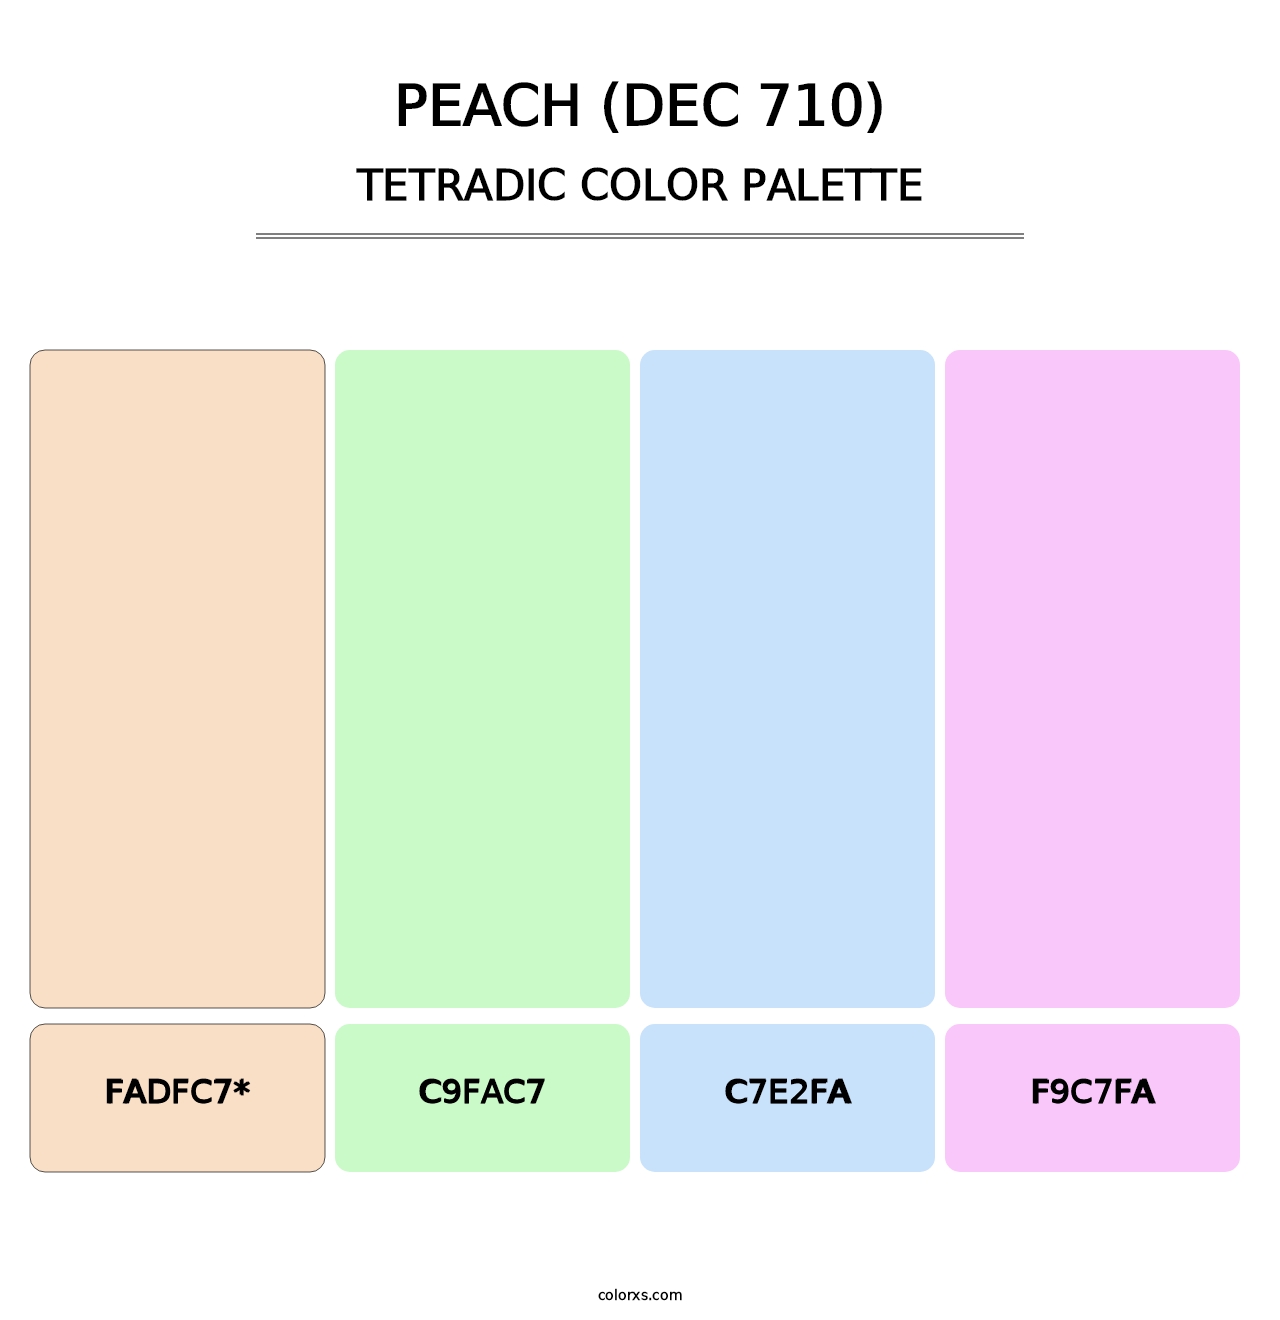 Peach (DEC 710) - Tetradic Color Palette